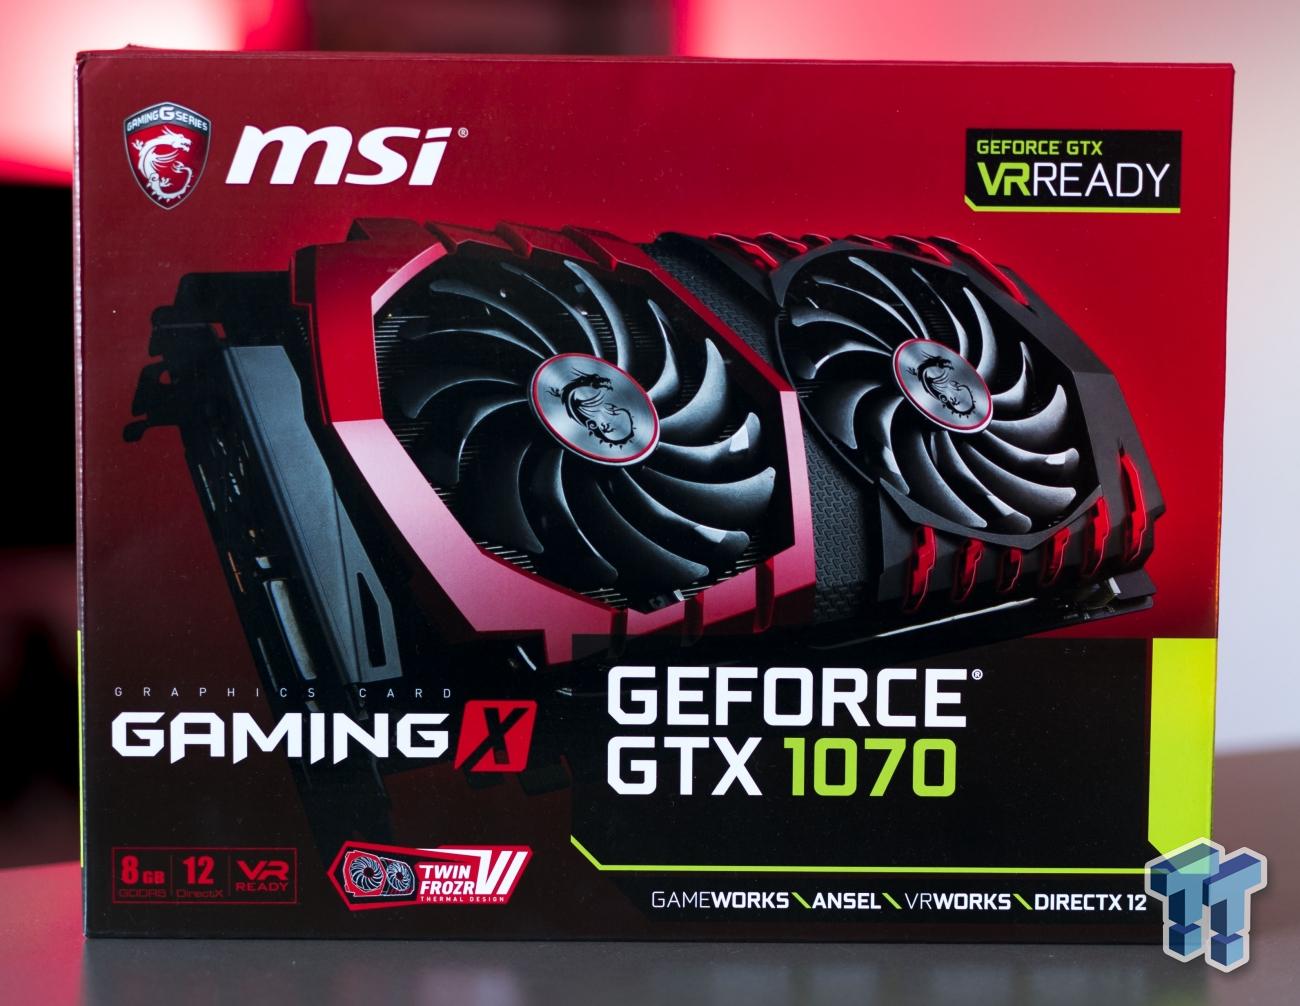 MSI GeForce GTX 1070 Gaming X 8G - Silent Gaming + Major OC Headroom